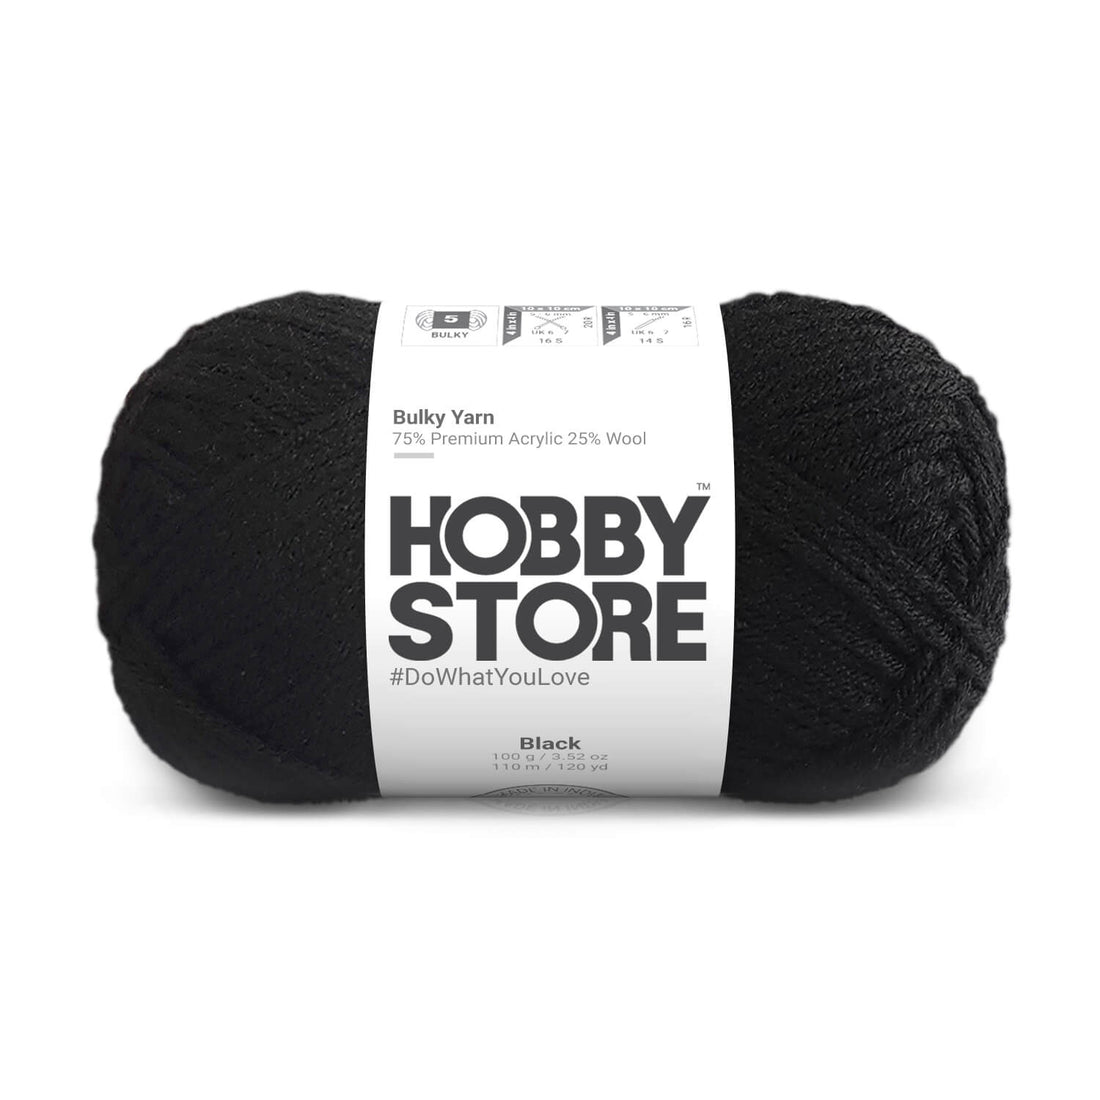 Bulky Yarn by Hobby Store - Ghingam 6027